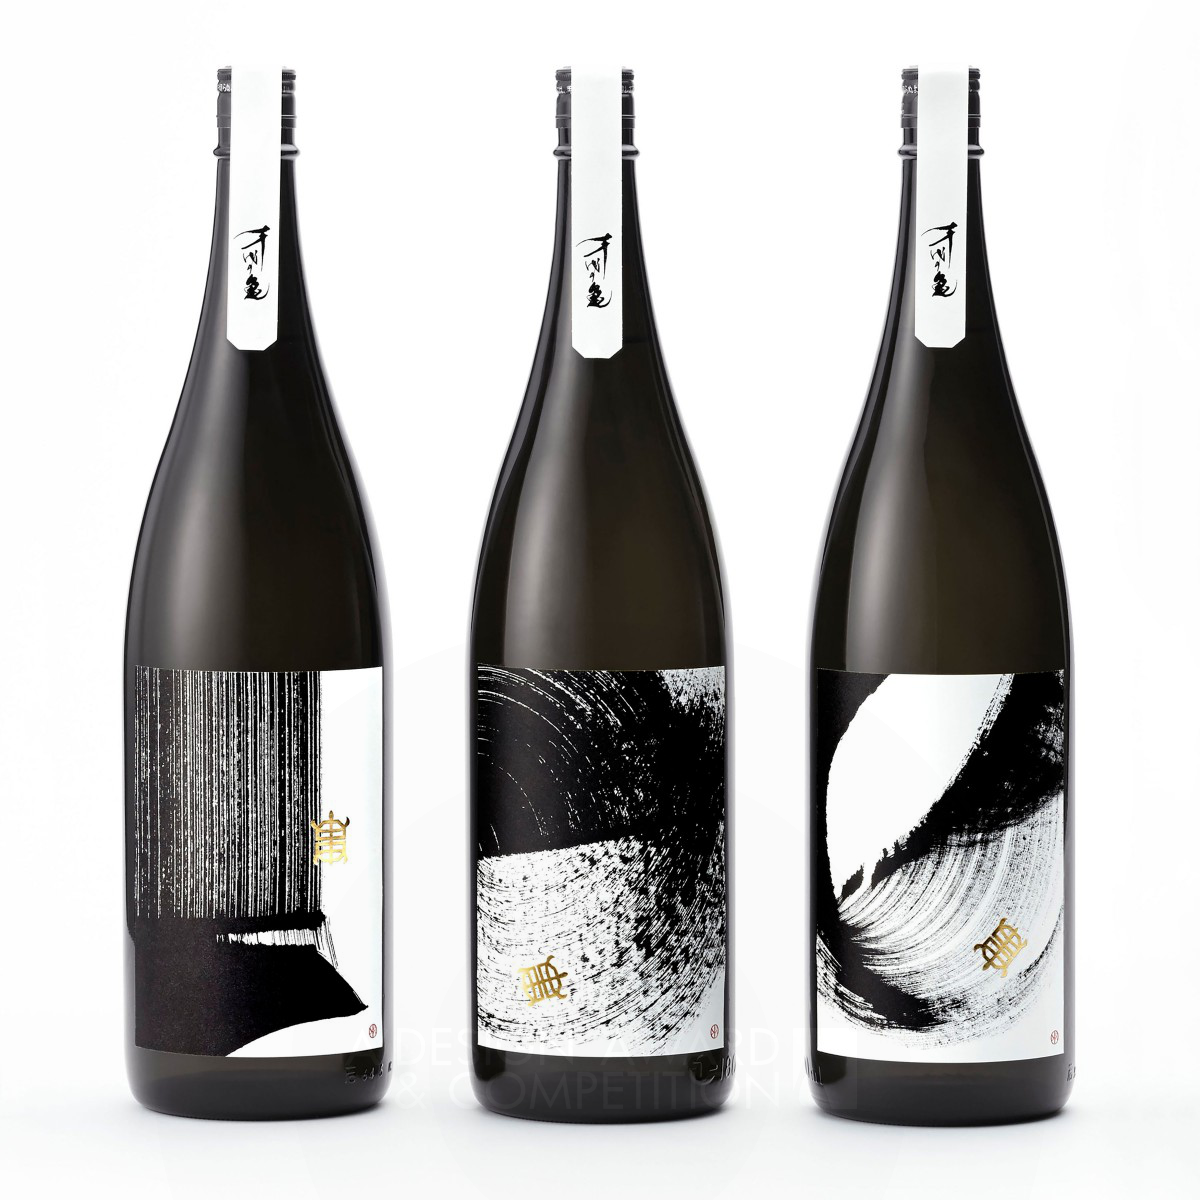 Souryu sake package design by Yoshiki Uchida